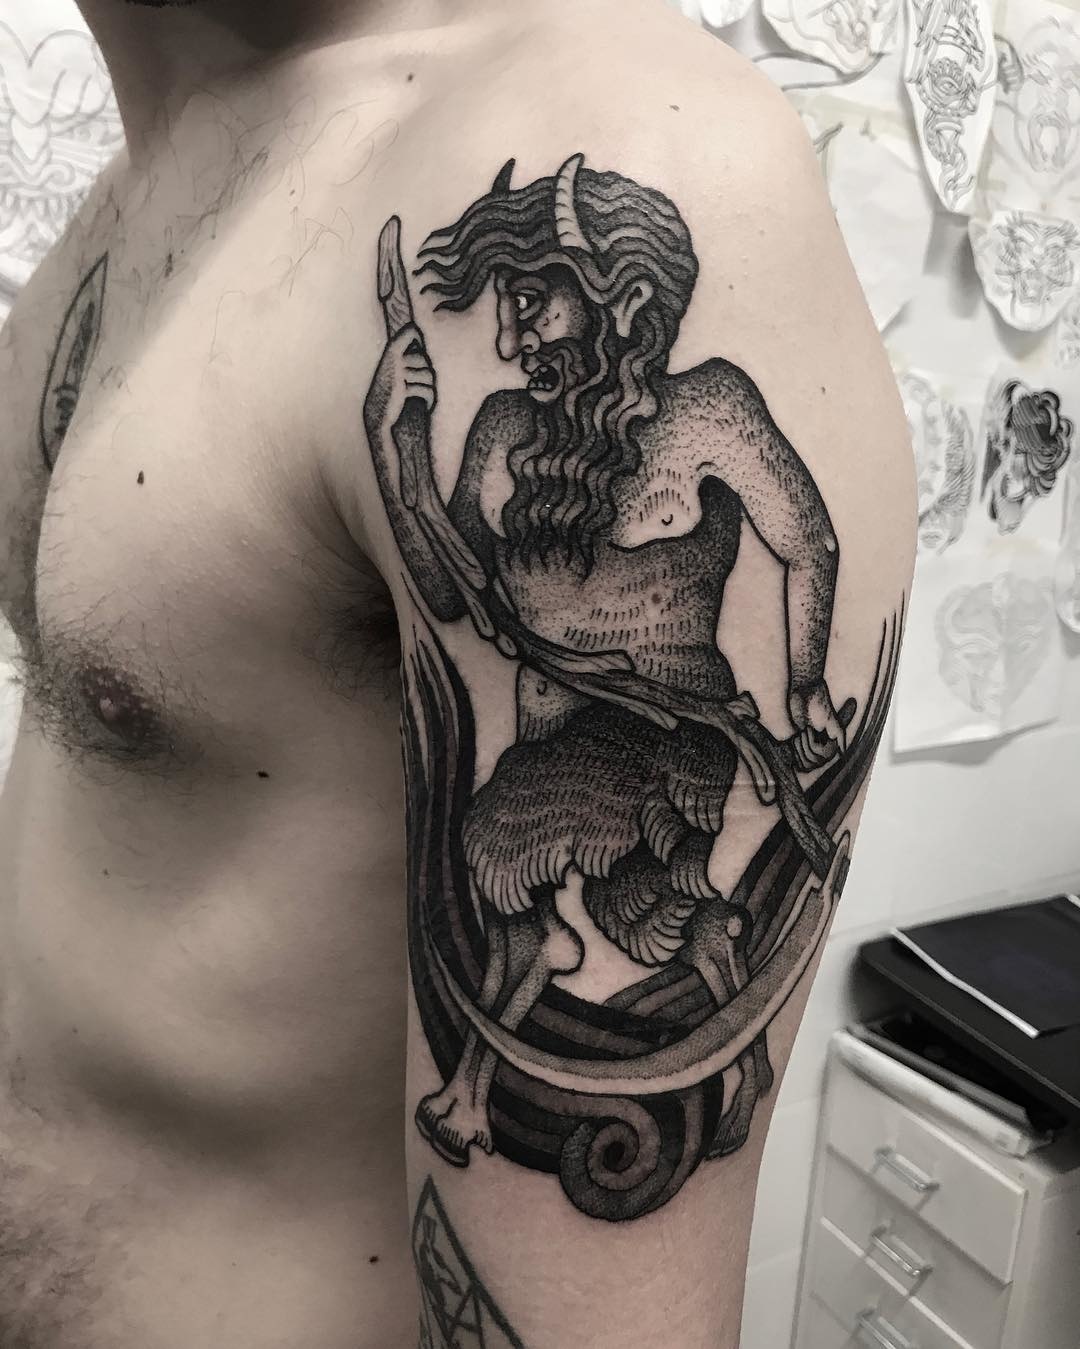 Las fases del tatuaje de hombre lobo